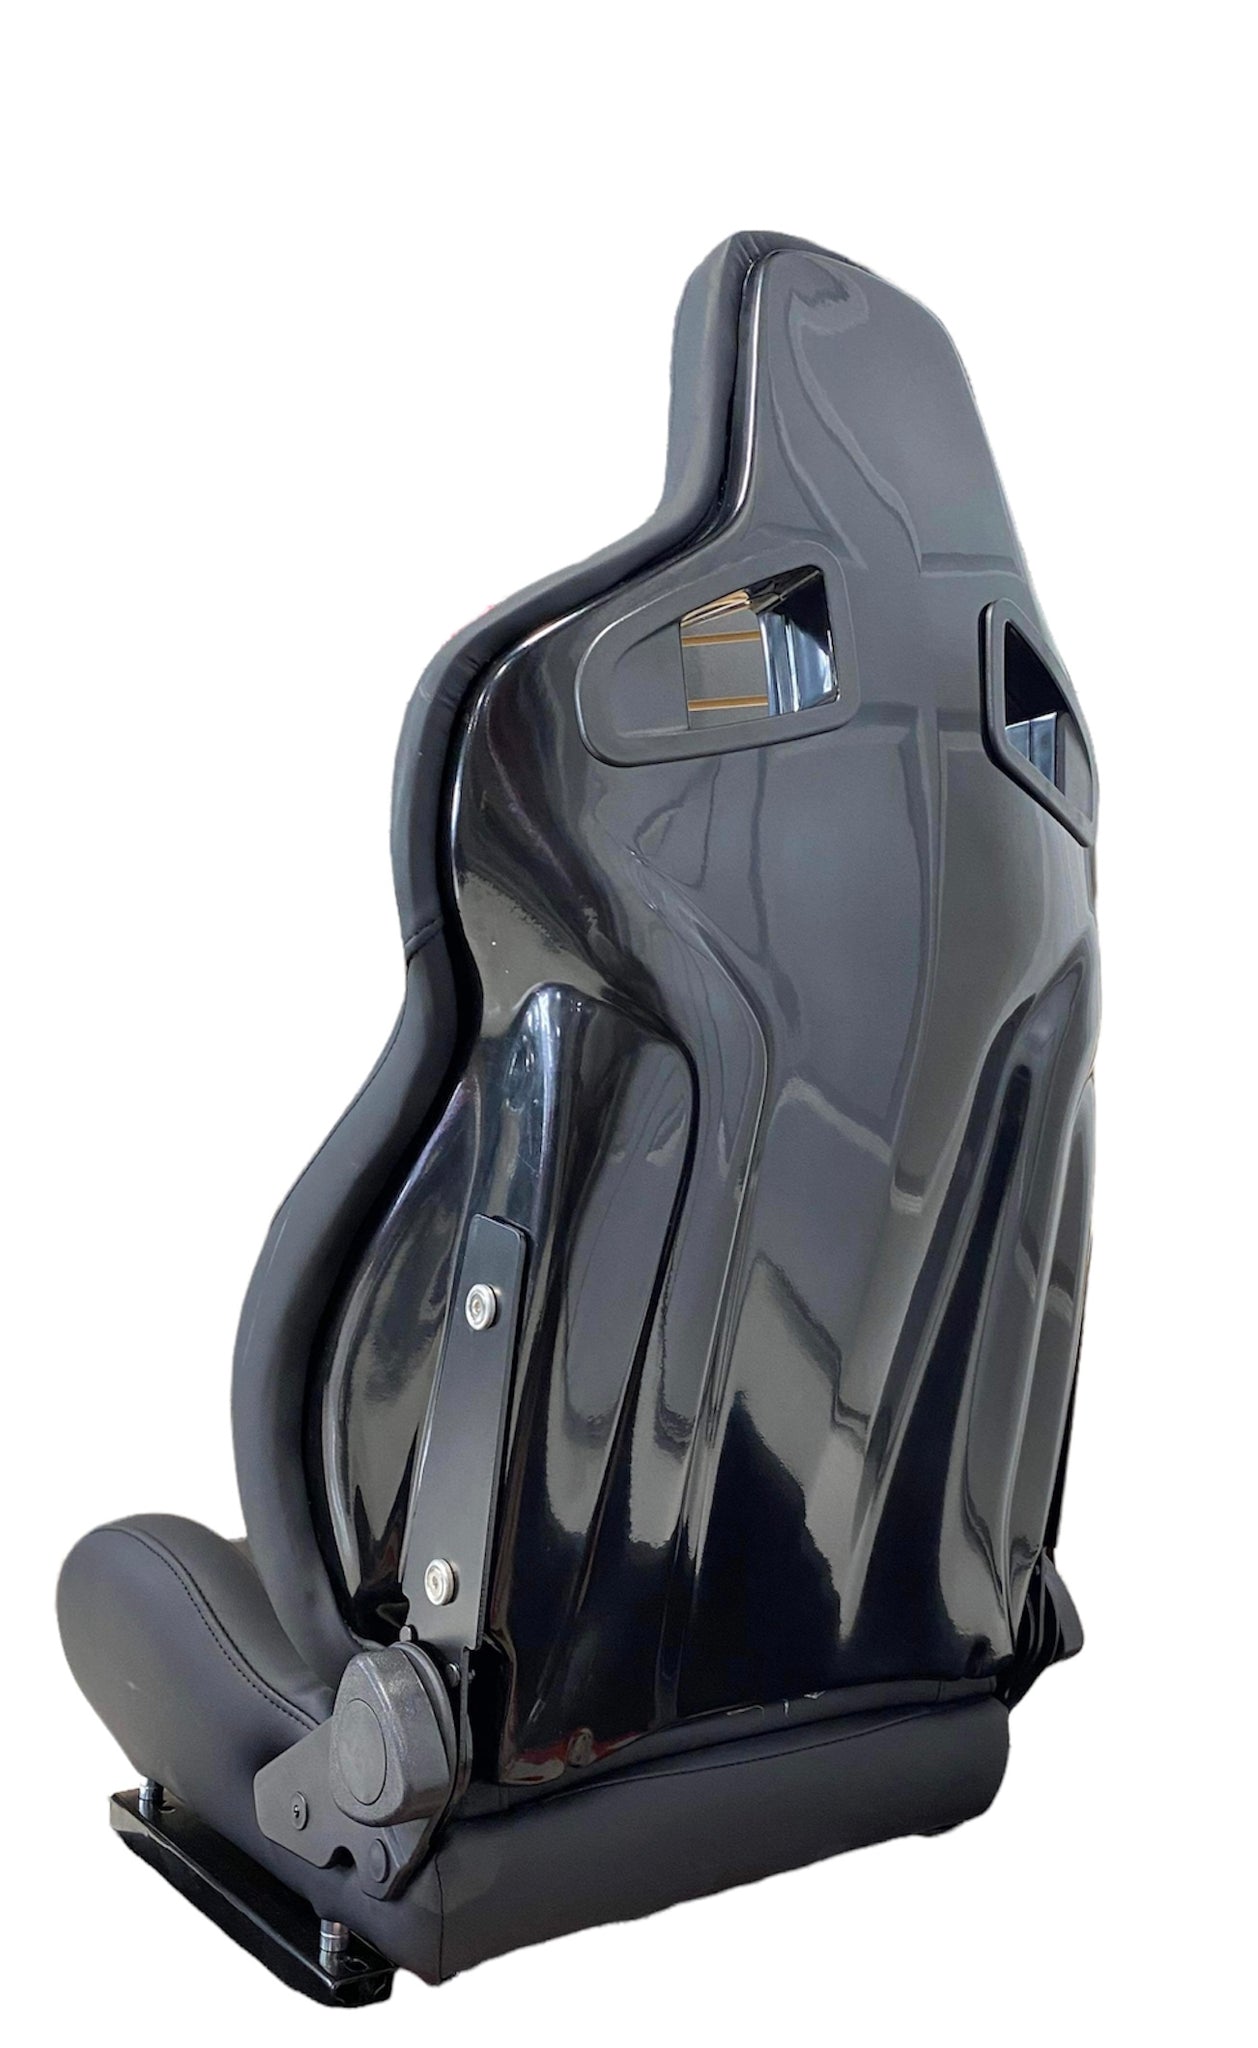 SPDZ1 Black Phantom Seats Black Leather/Carbon Weave SPDZ1